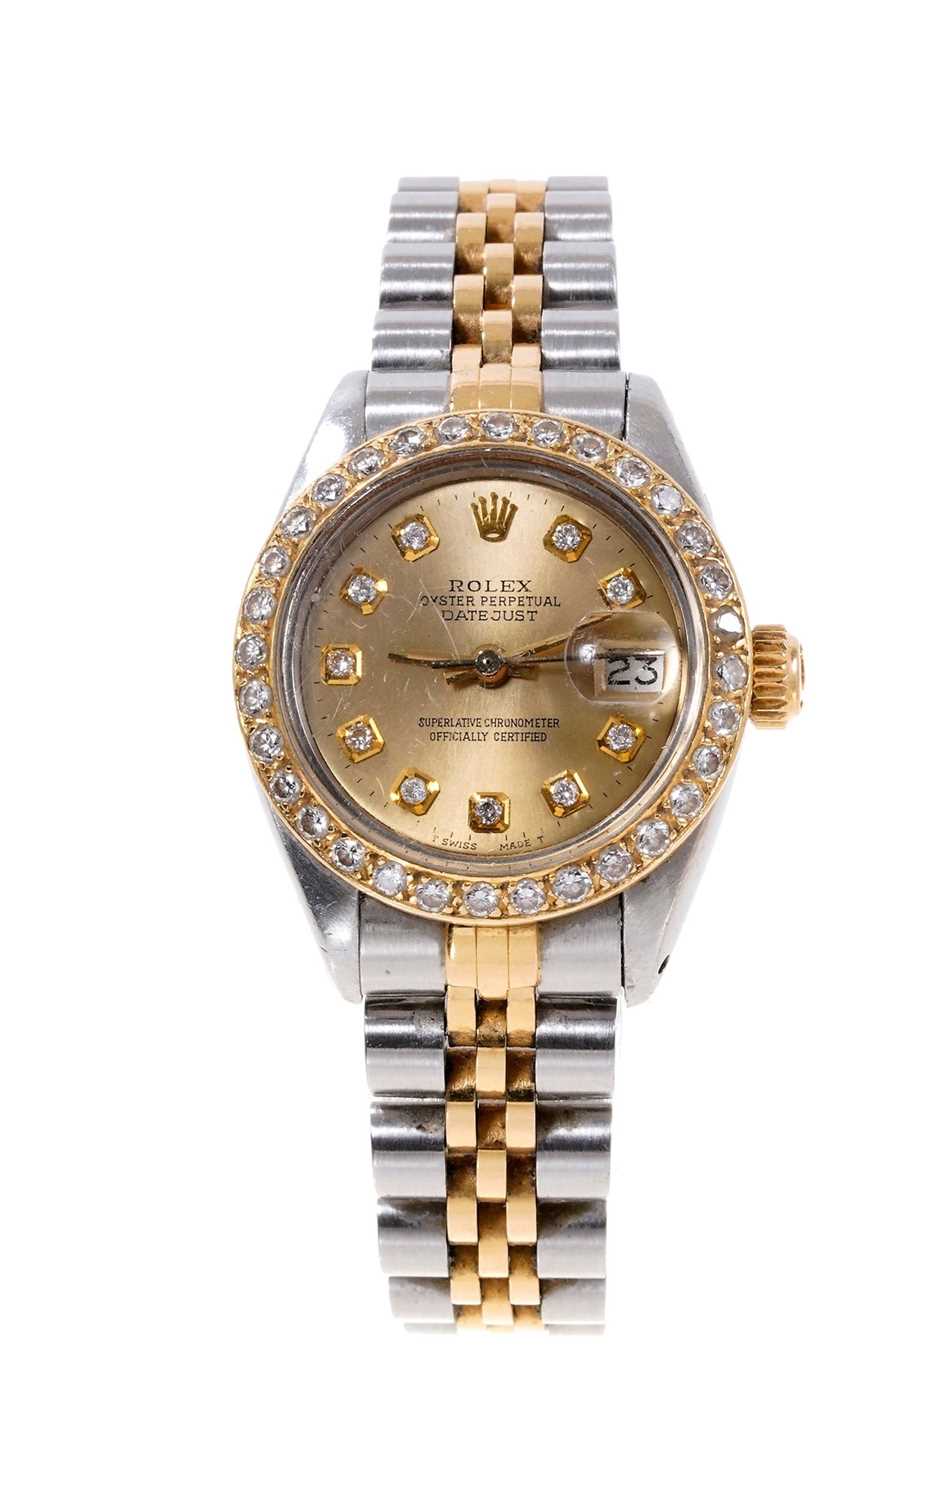 Lot 556 - Ladies Rolex DateJust stainless steel wristwatch